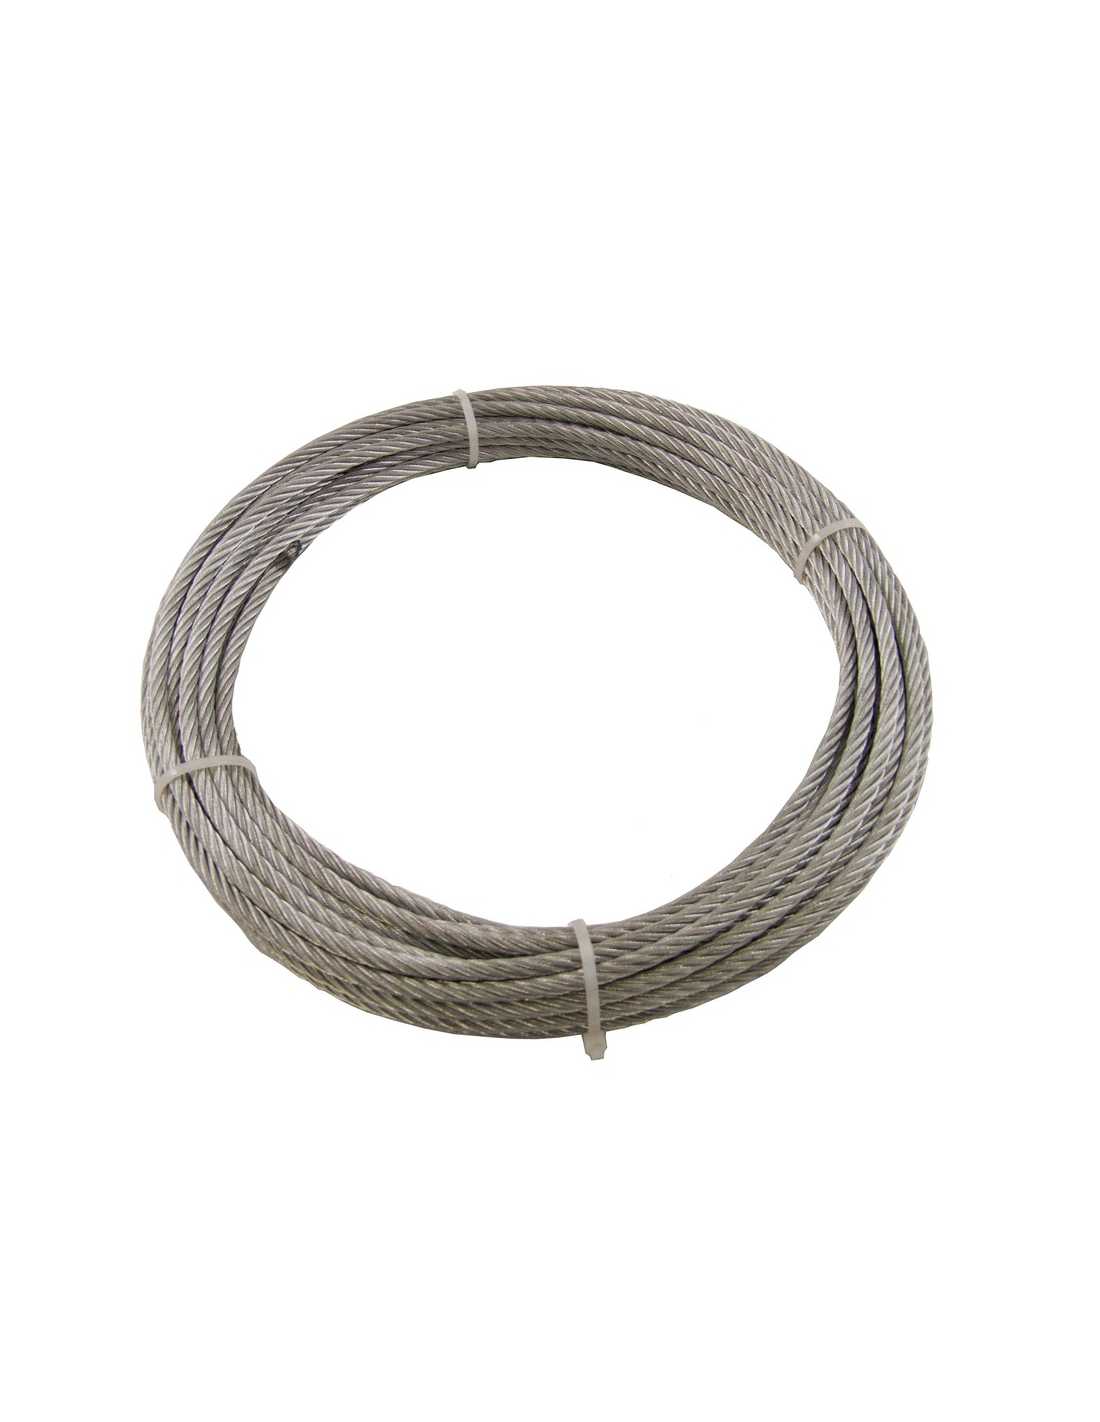 Câble métallique tressé en acier inoxydable de 4mm de diamètre